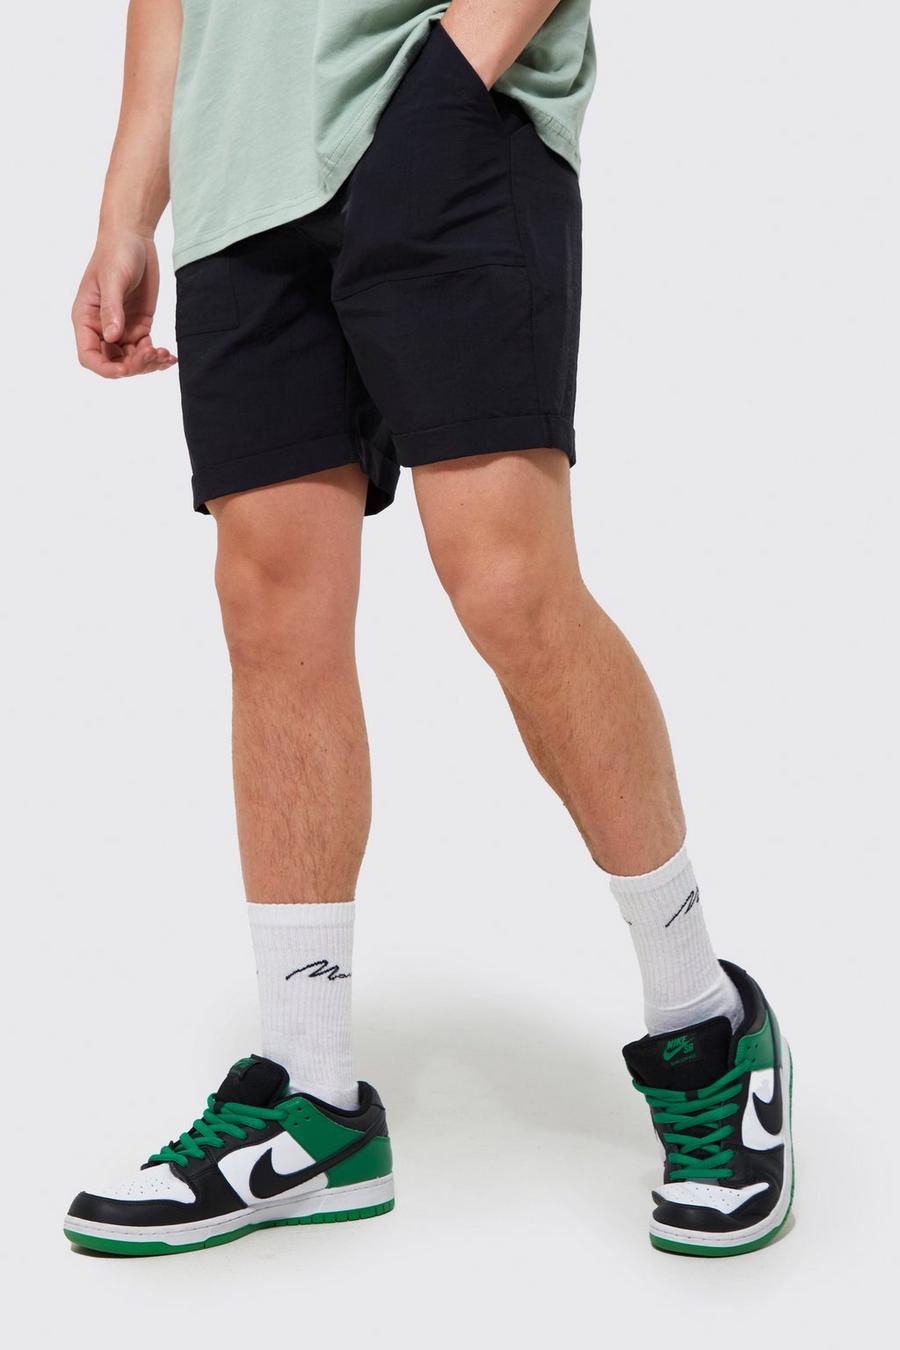 Smarte Slim-Fit Shorts in Knitteroptik, Black